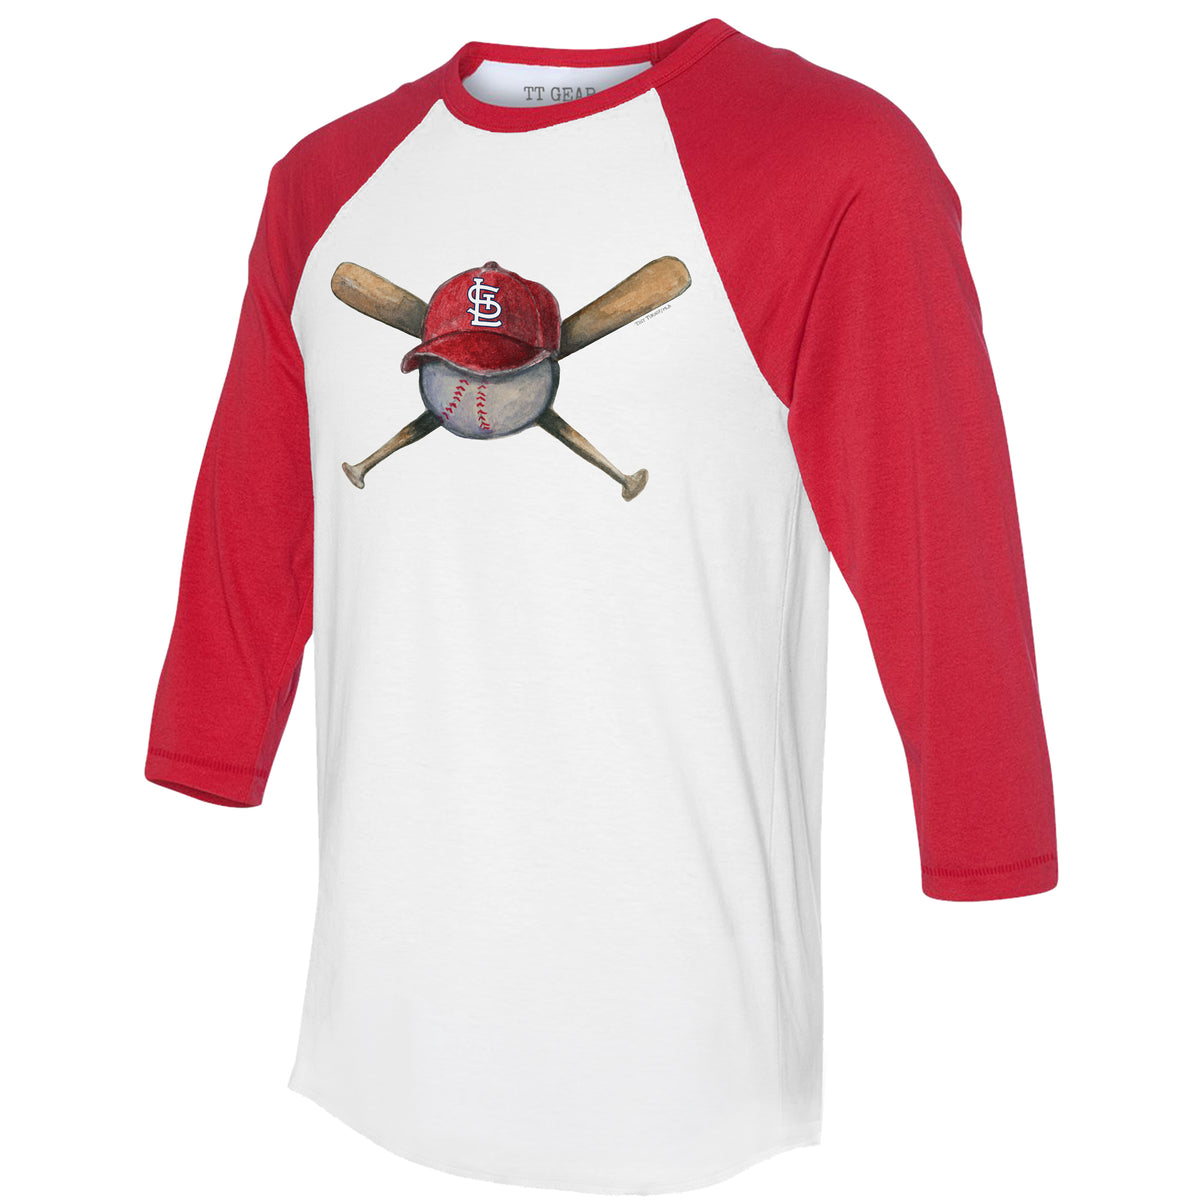 Girls Toddler Tiny Turnip Red St. Louis Cardinals Heart Bat Fringe T-Shirt Size: 4T